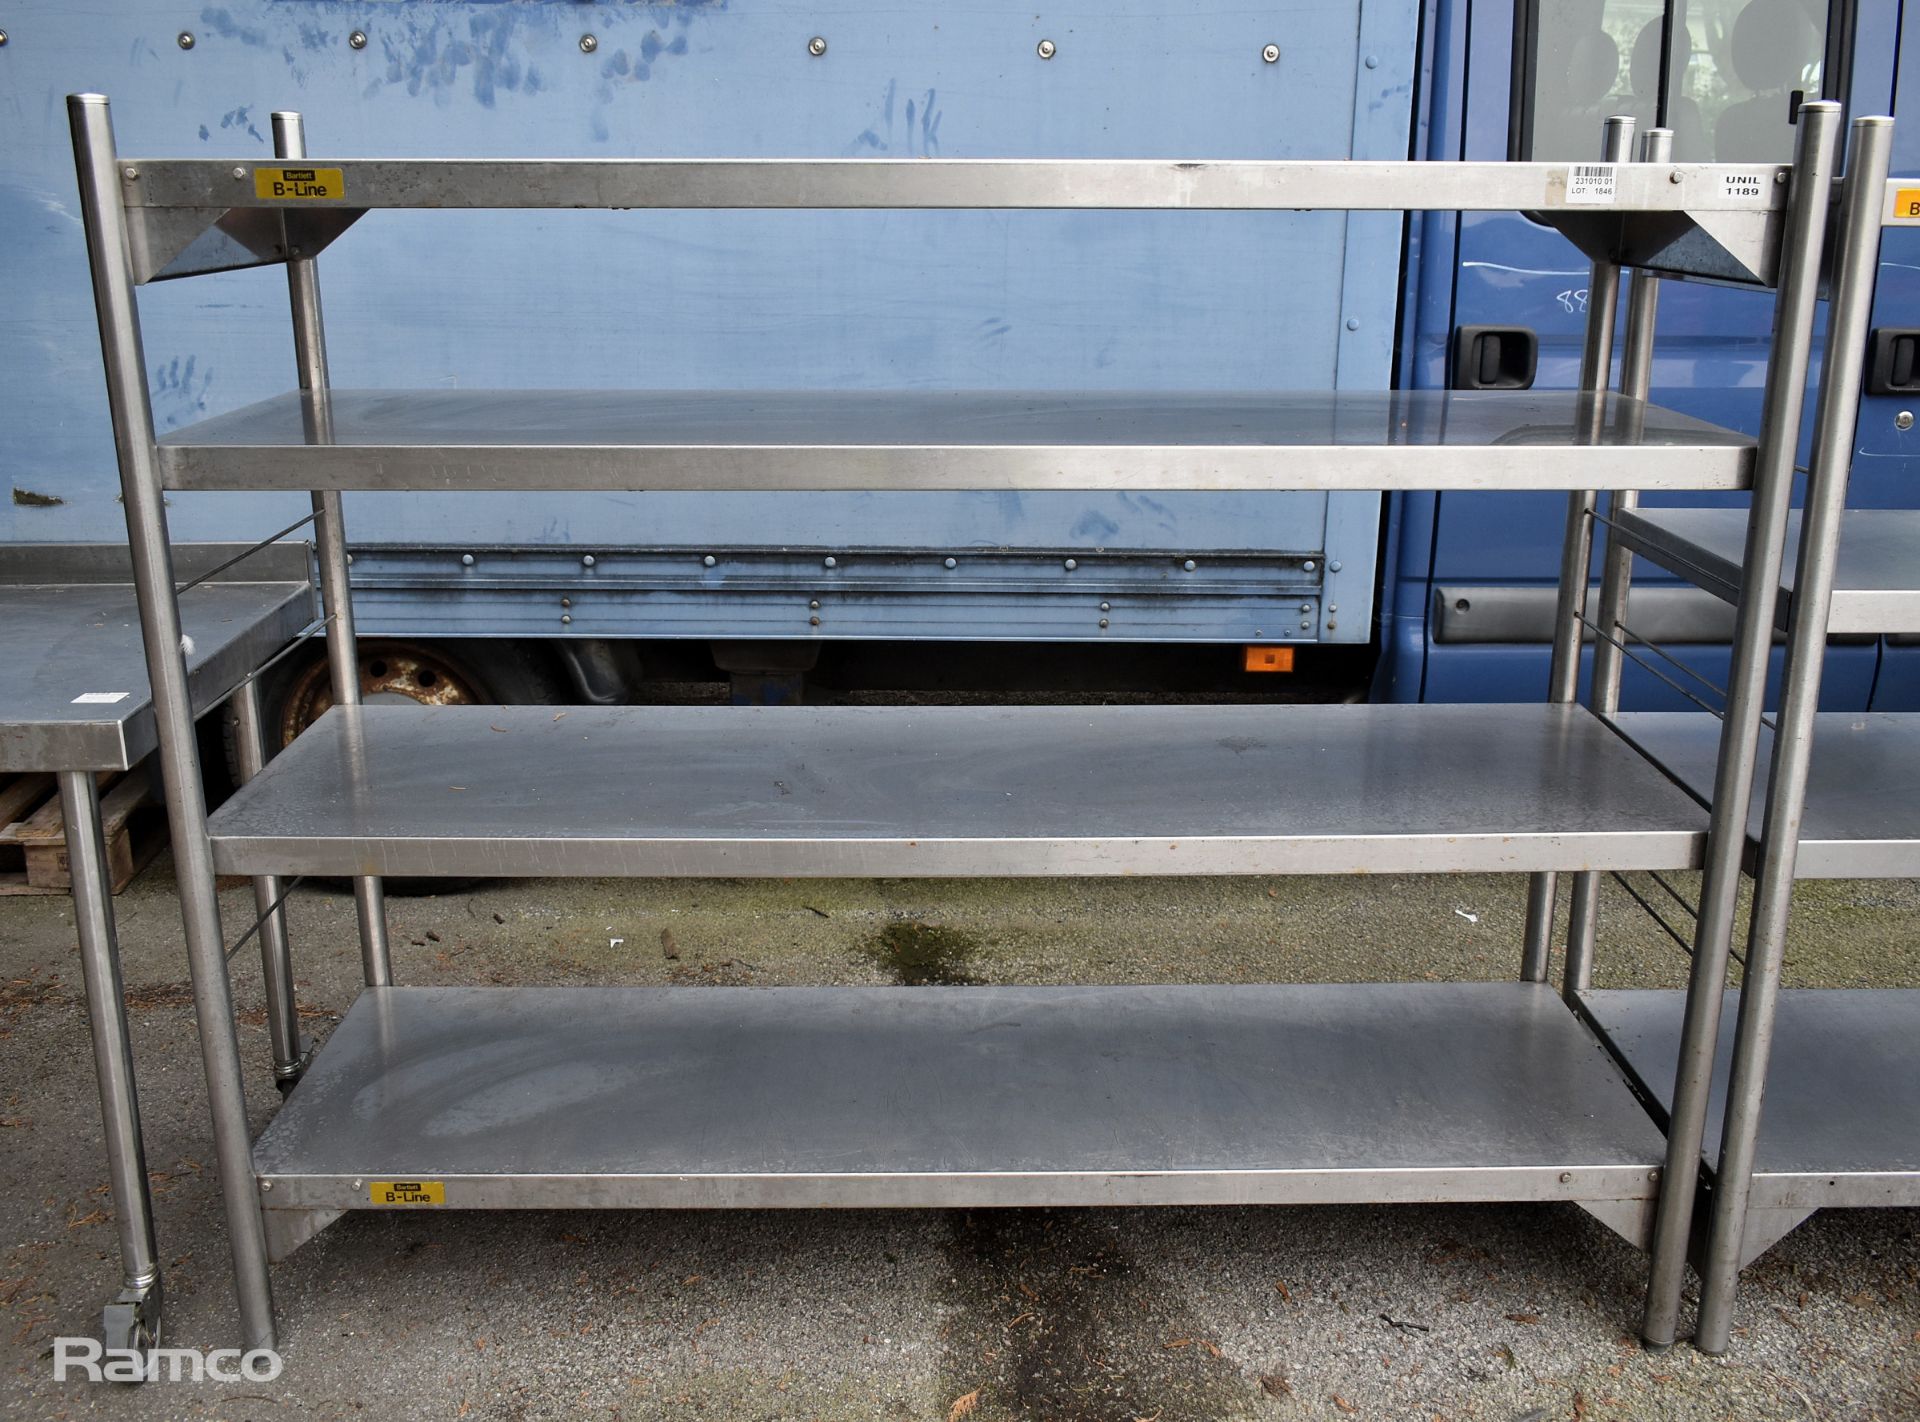 Bartlett B-line stainless steel 4 shelf unit - W 1820 x D 550 x H 1520 mm